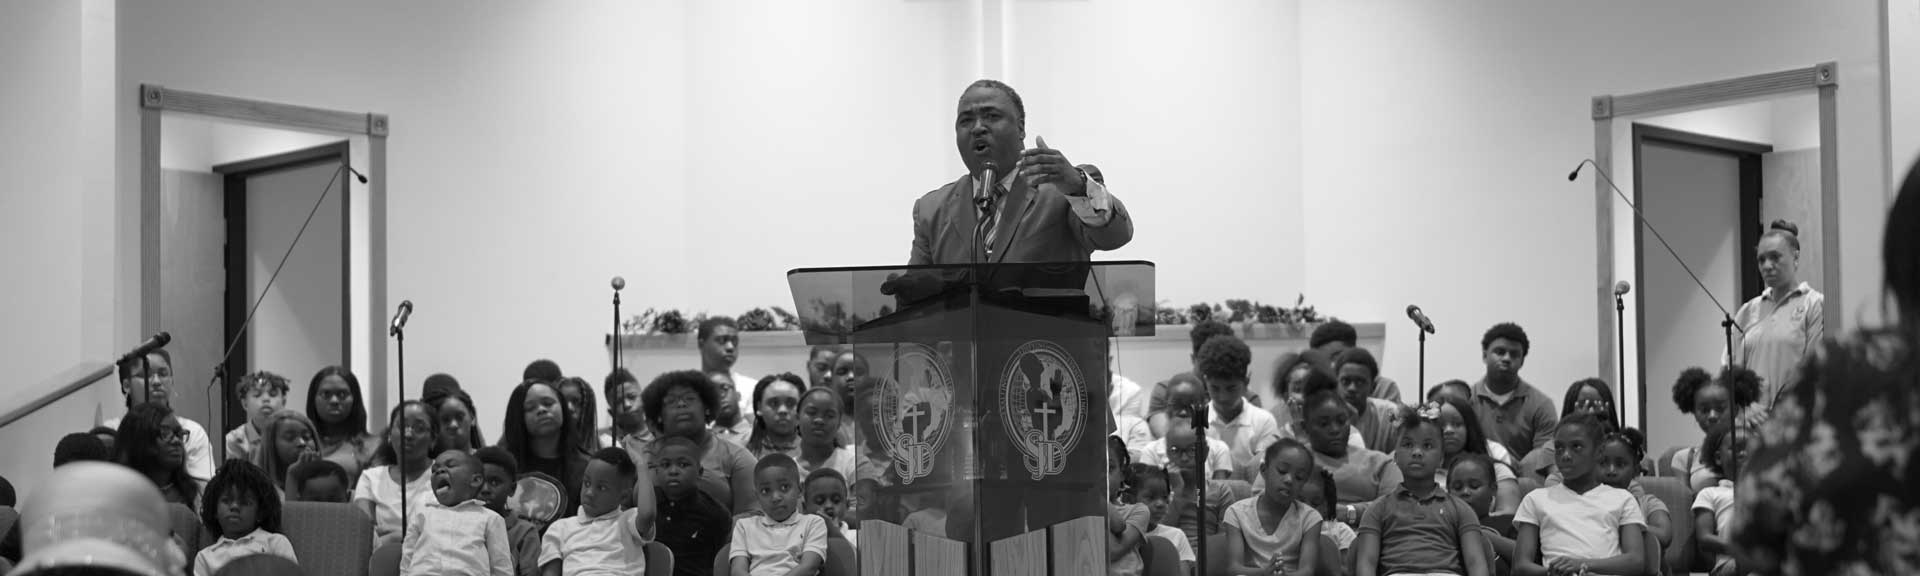 Pastor Marshall preaching What We Believe